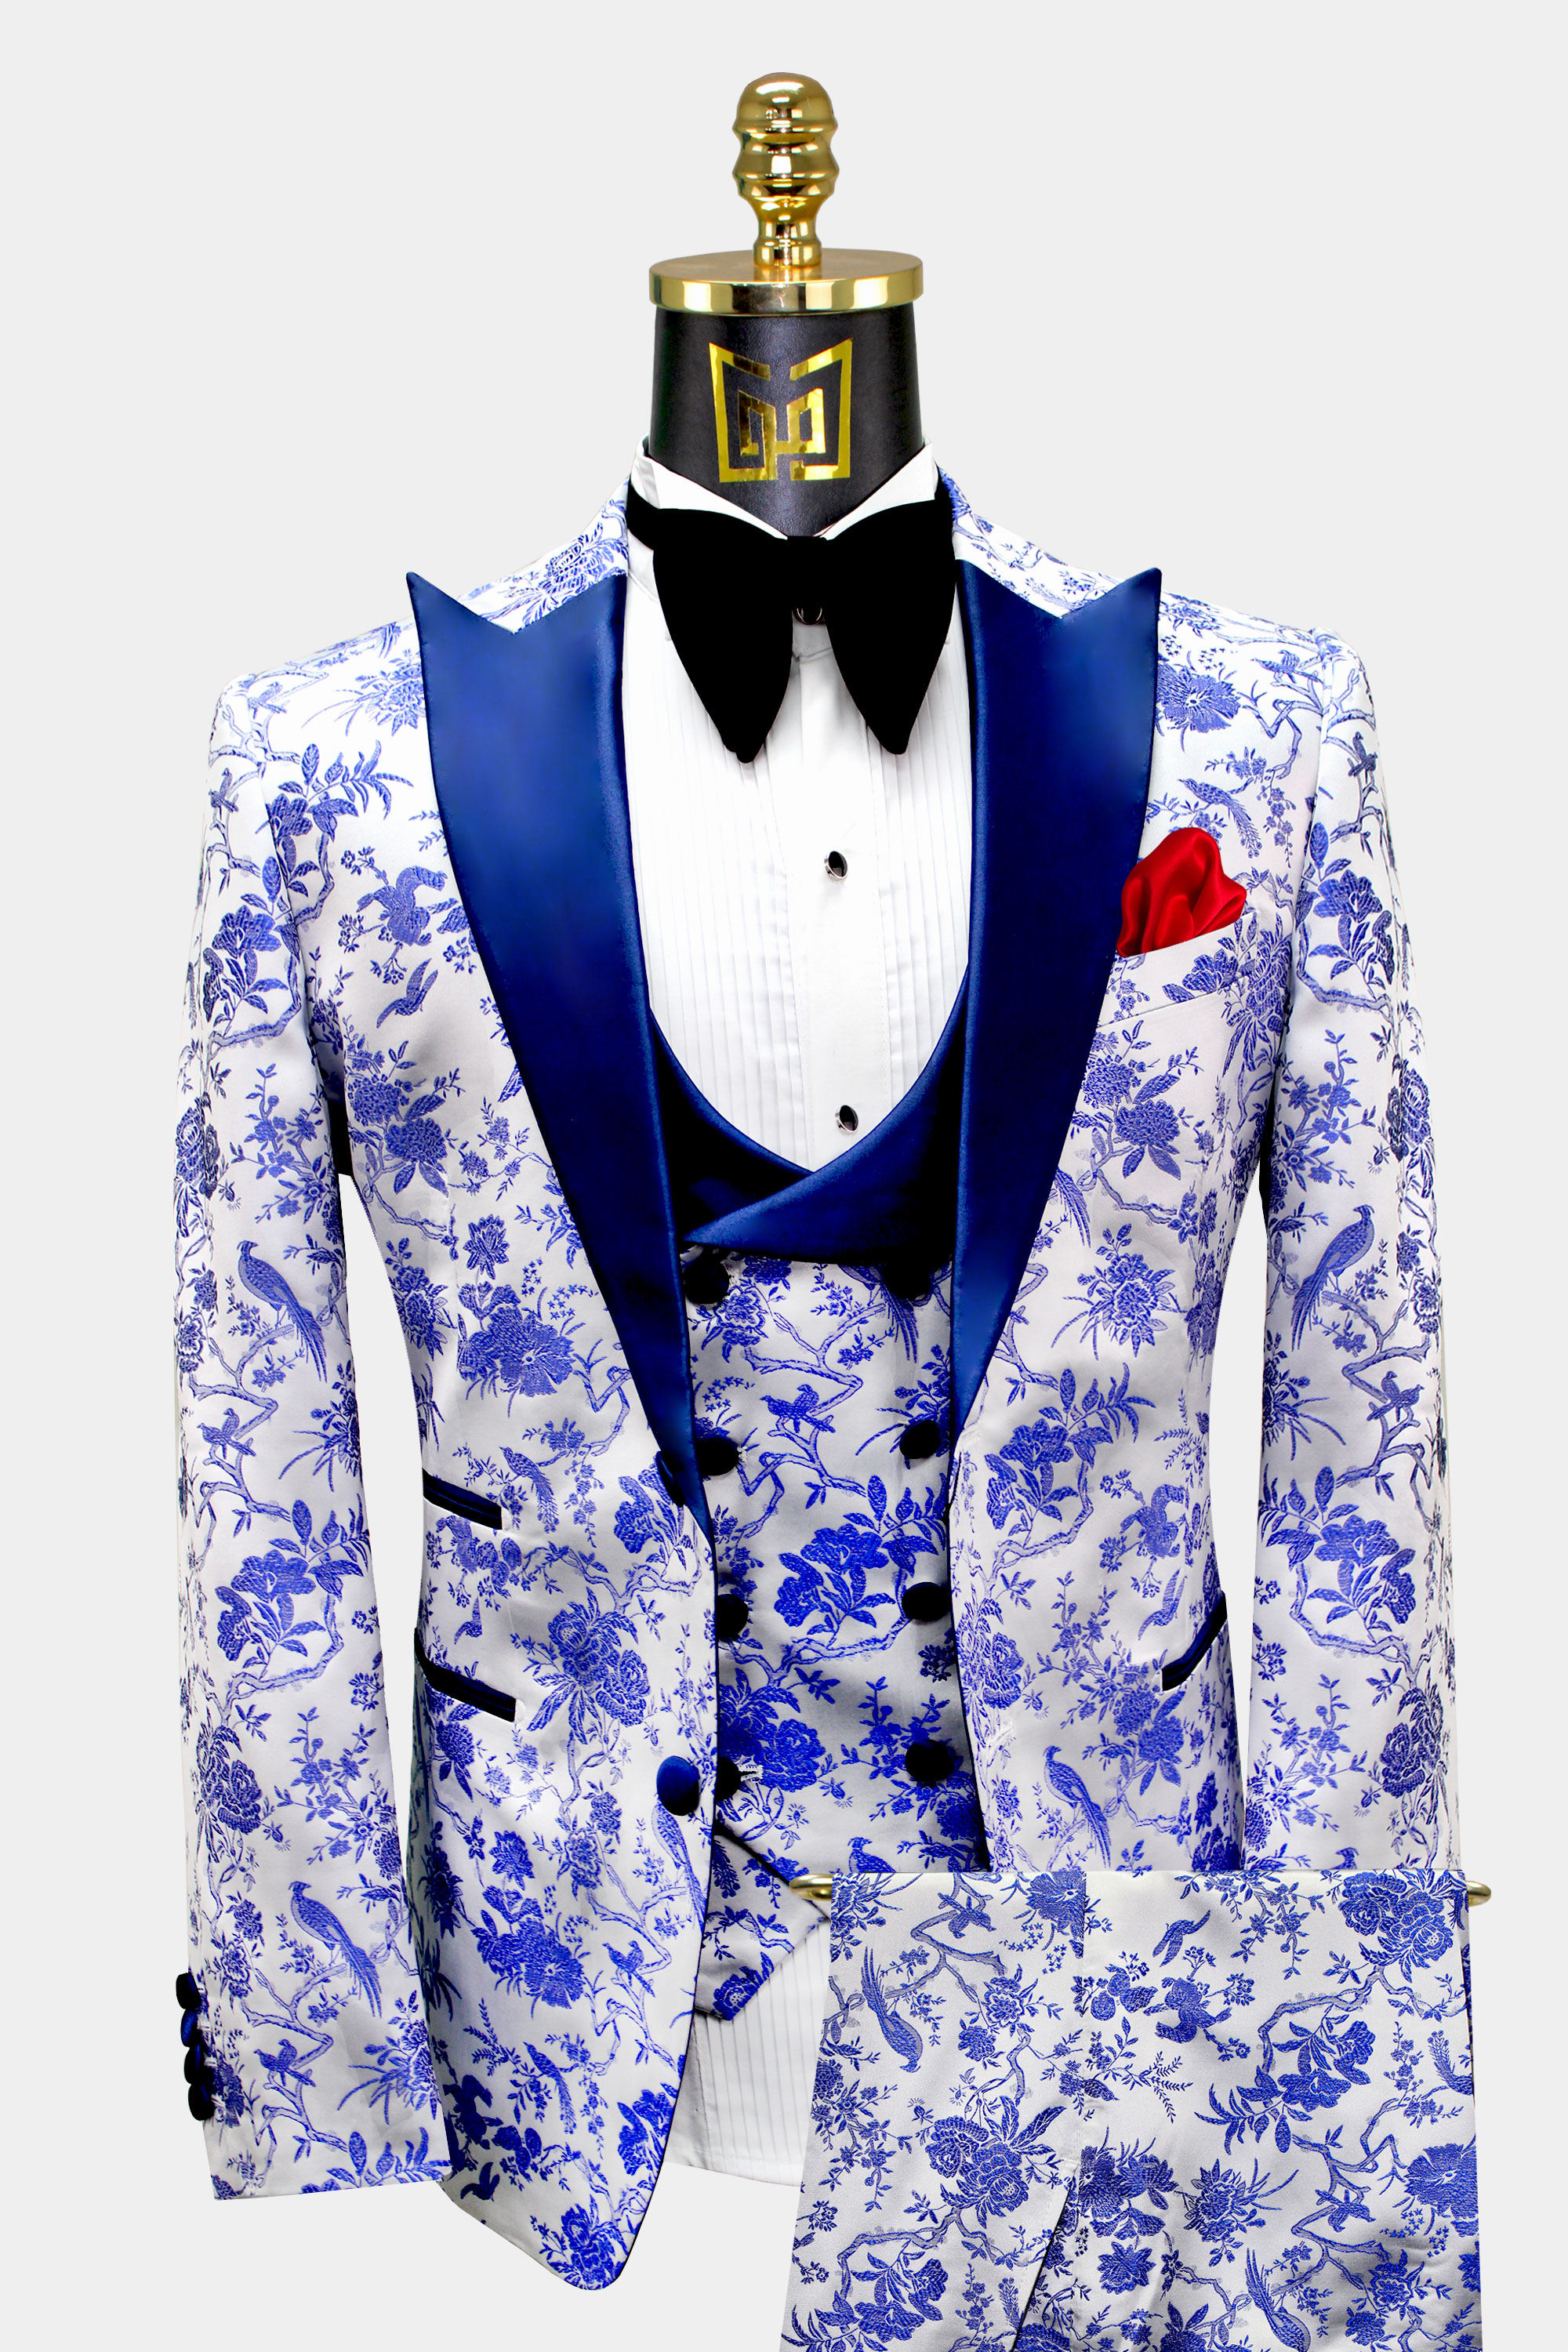 Electric Blue Floral Tuxedo - 3 Piece